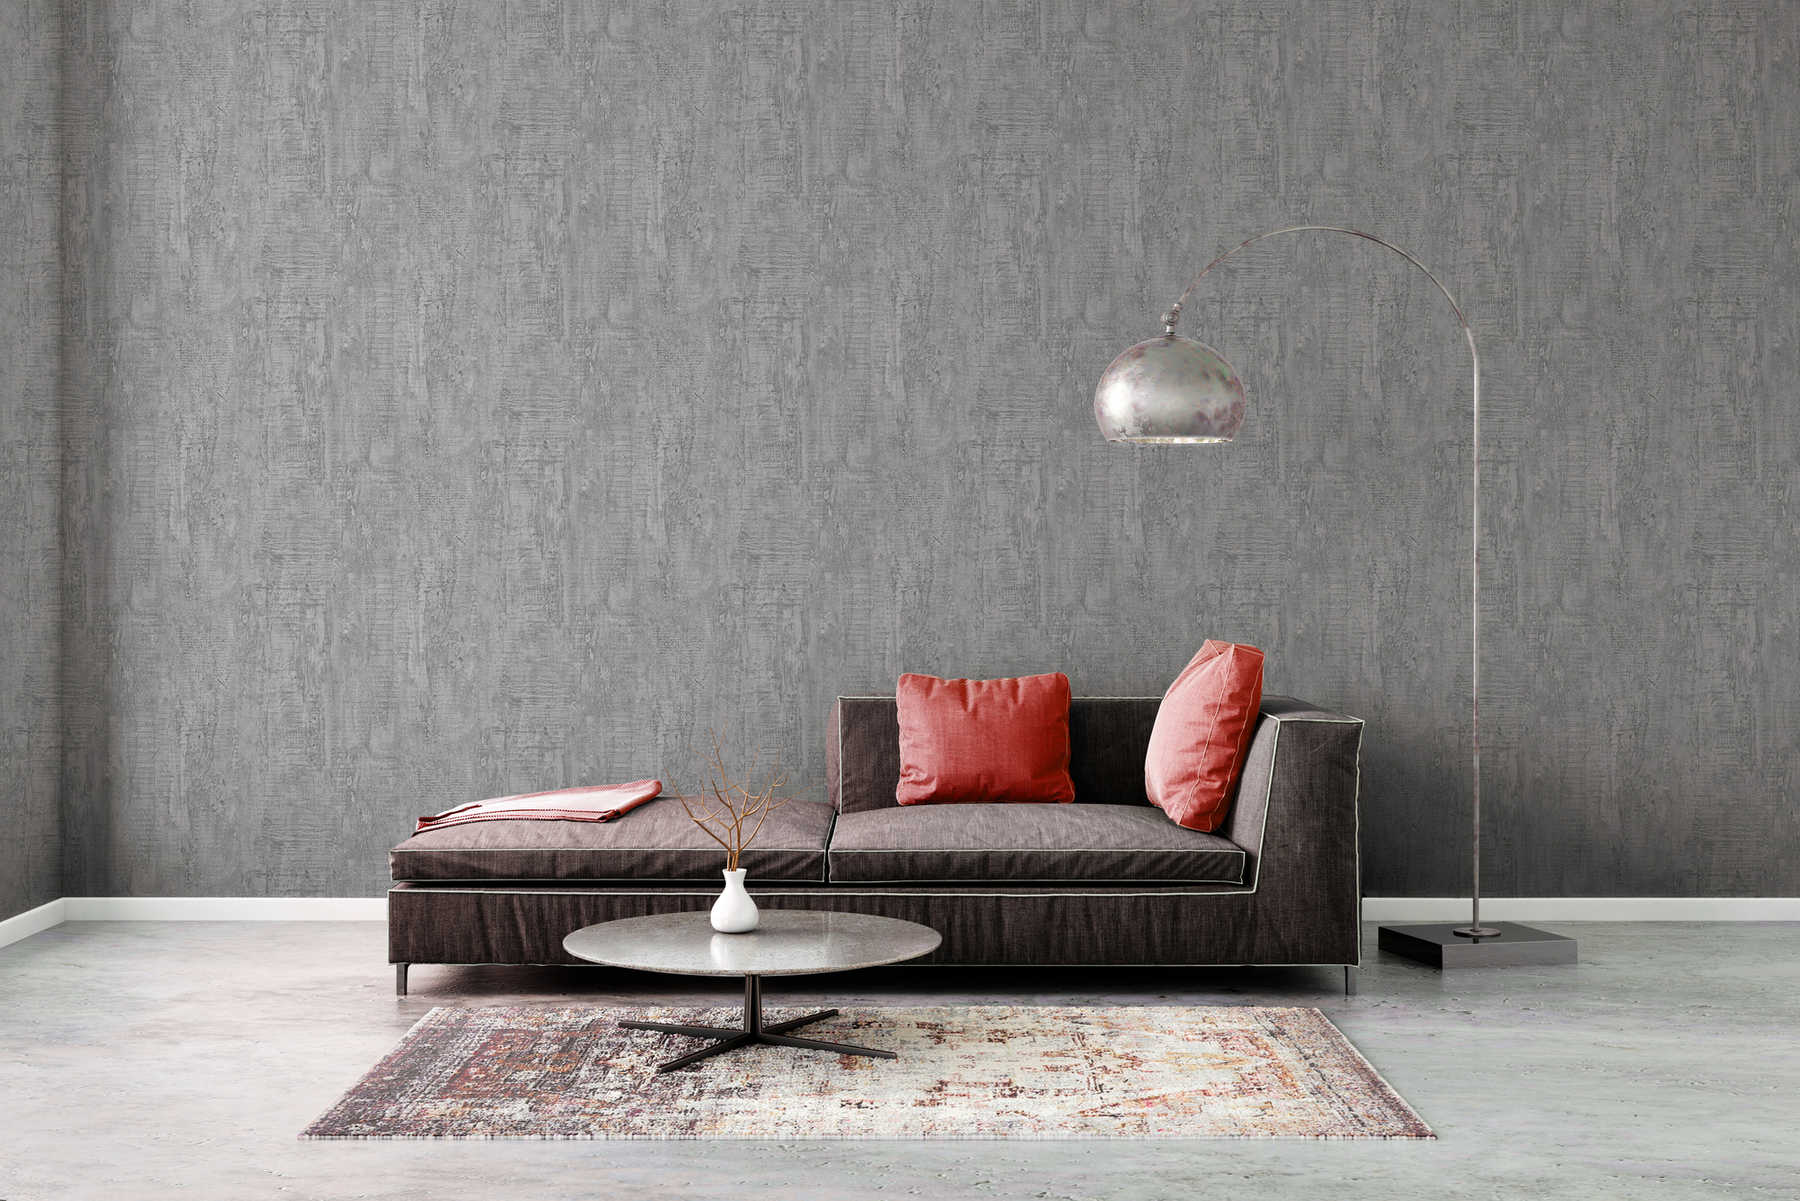             Rustic concrete look wallpaper for industrial design - grey
        